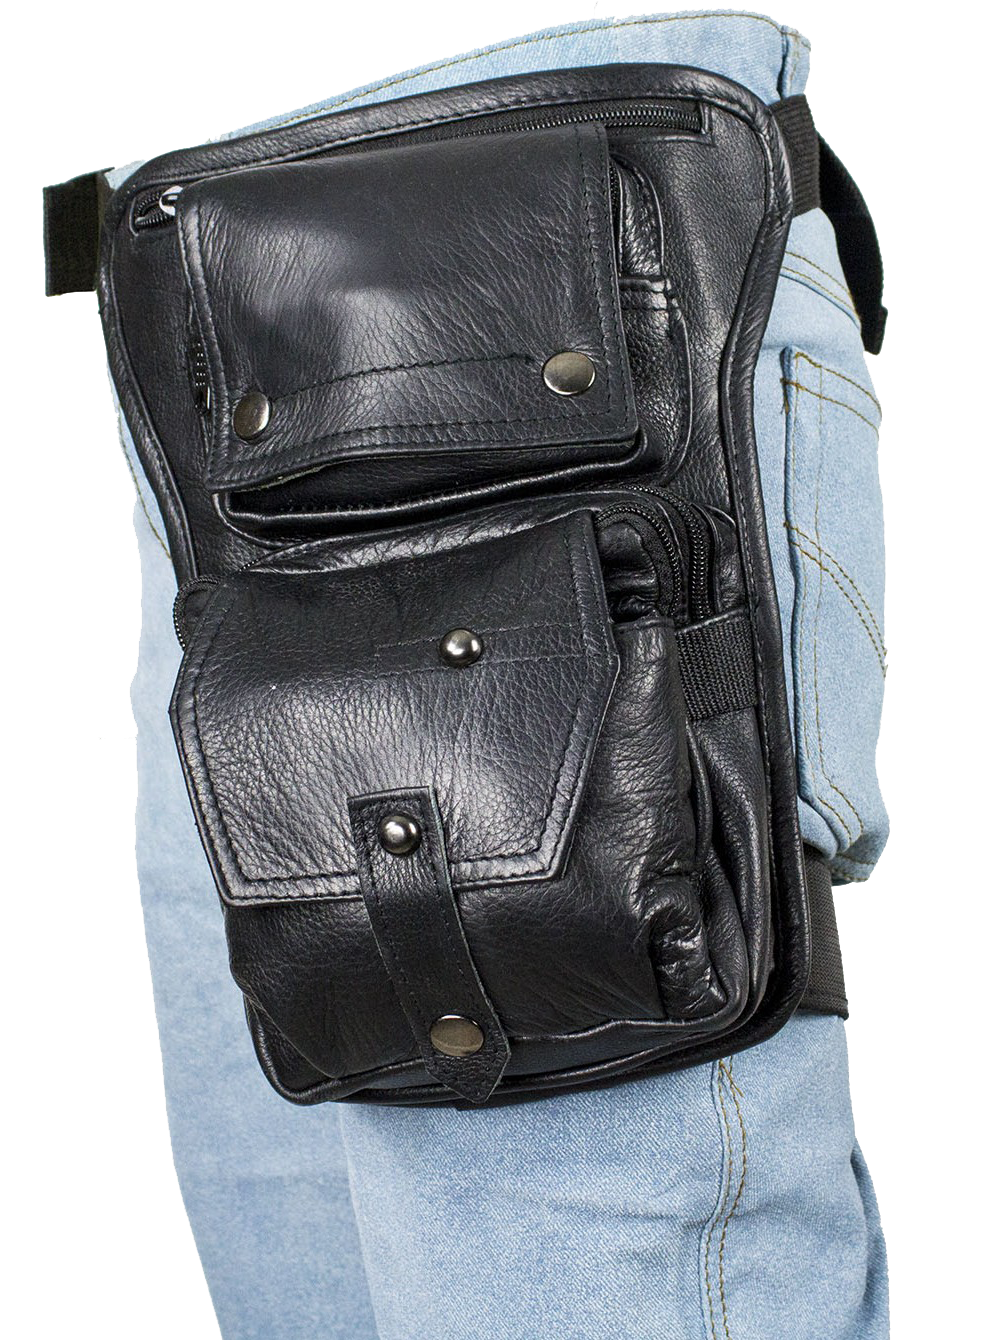 Black Leather Multi Pocket Thigh Bag with Gun Pocket - SKU AC1025-11-DL